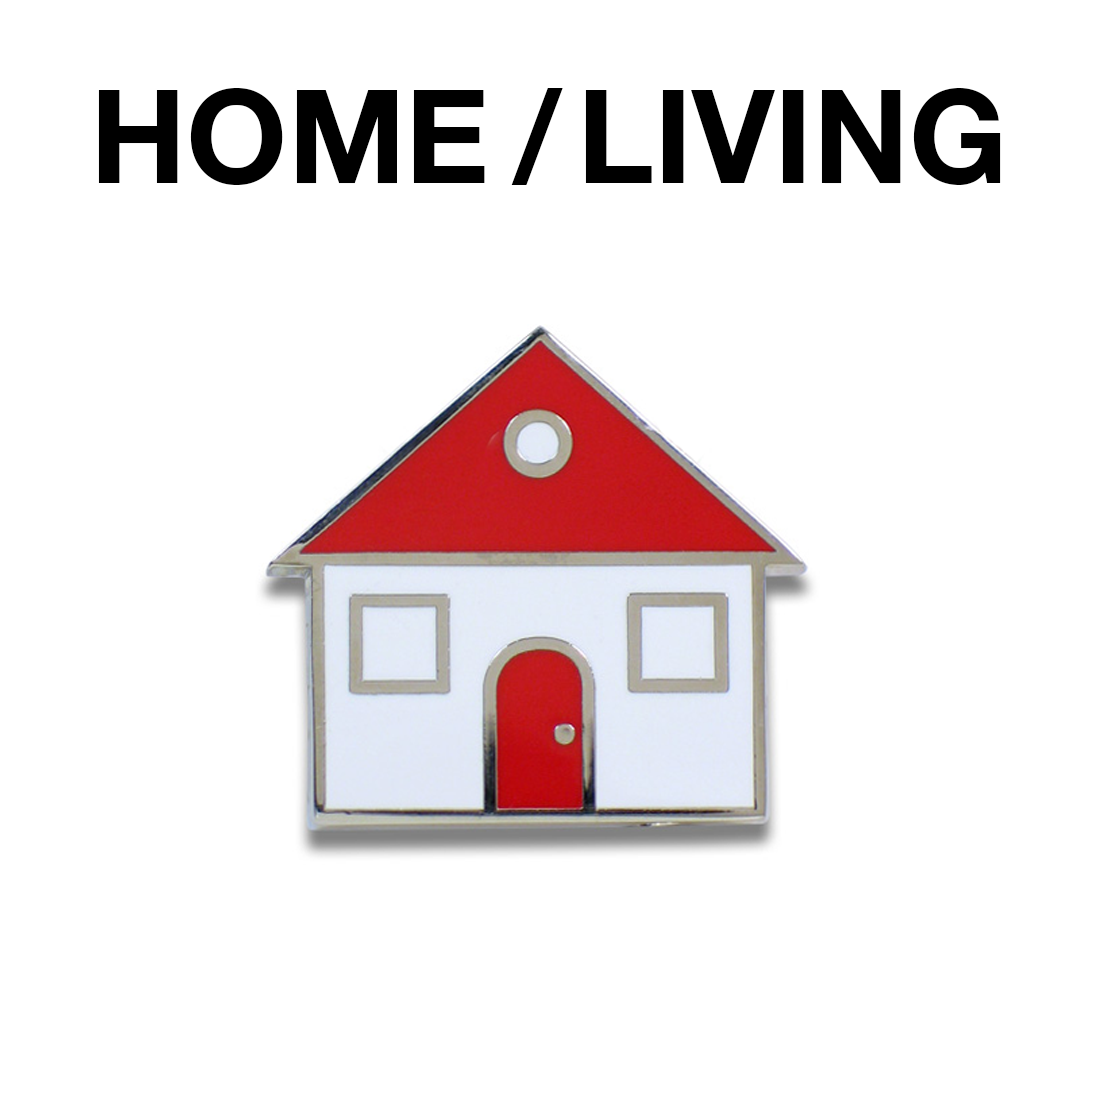 HOME/LIVING